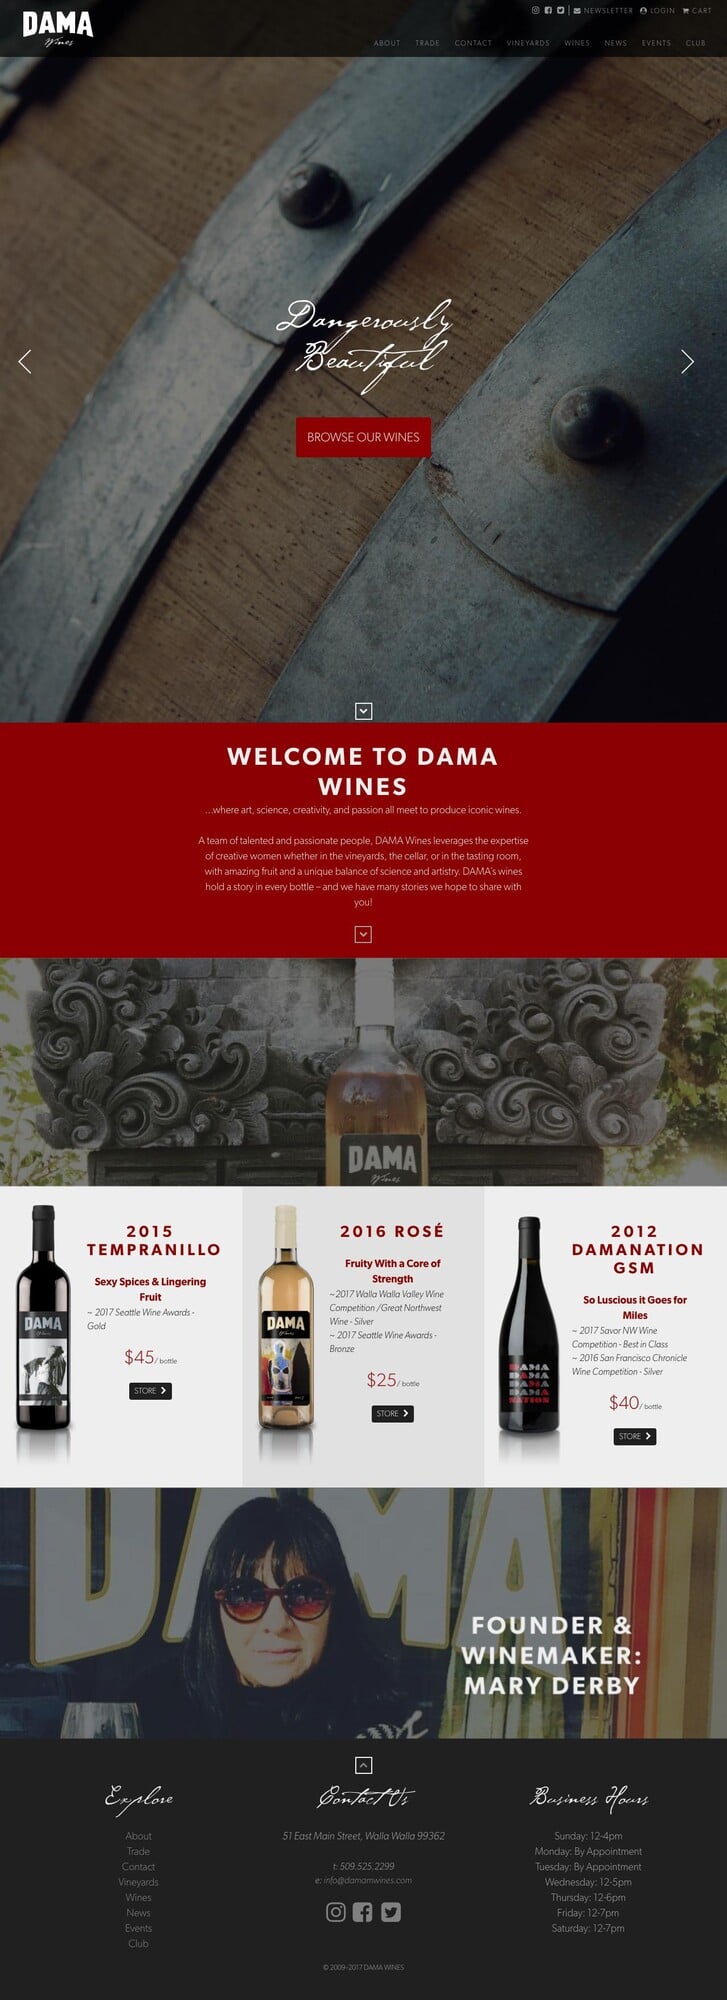 Dama Wines - Home